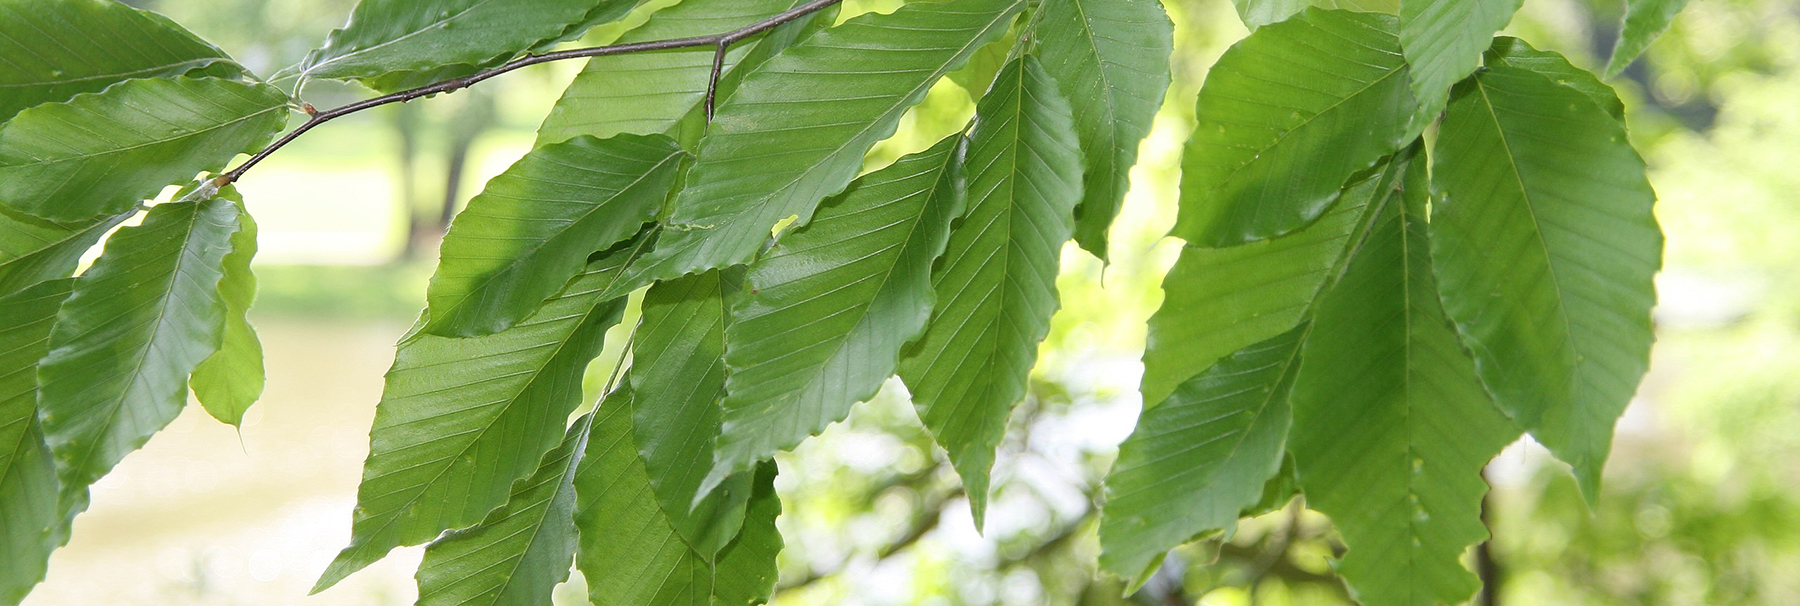 American beech tree leaves